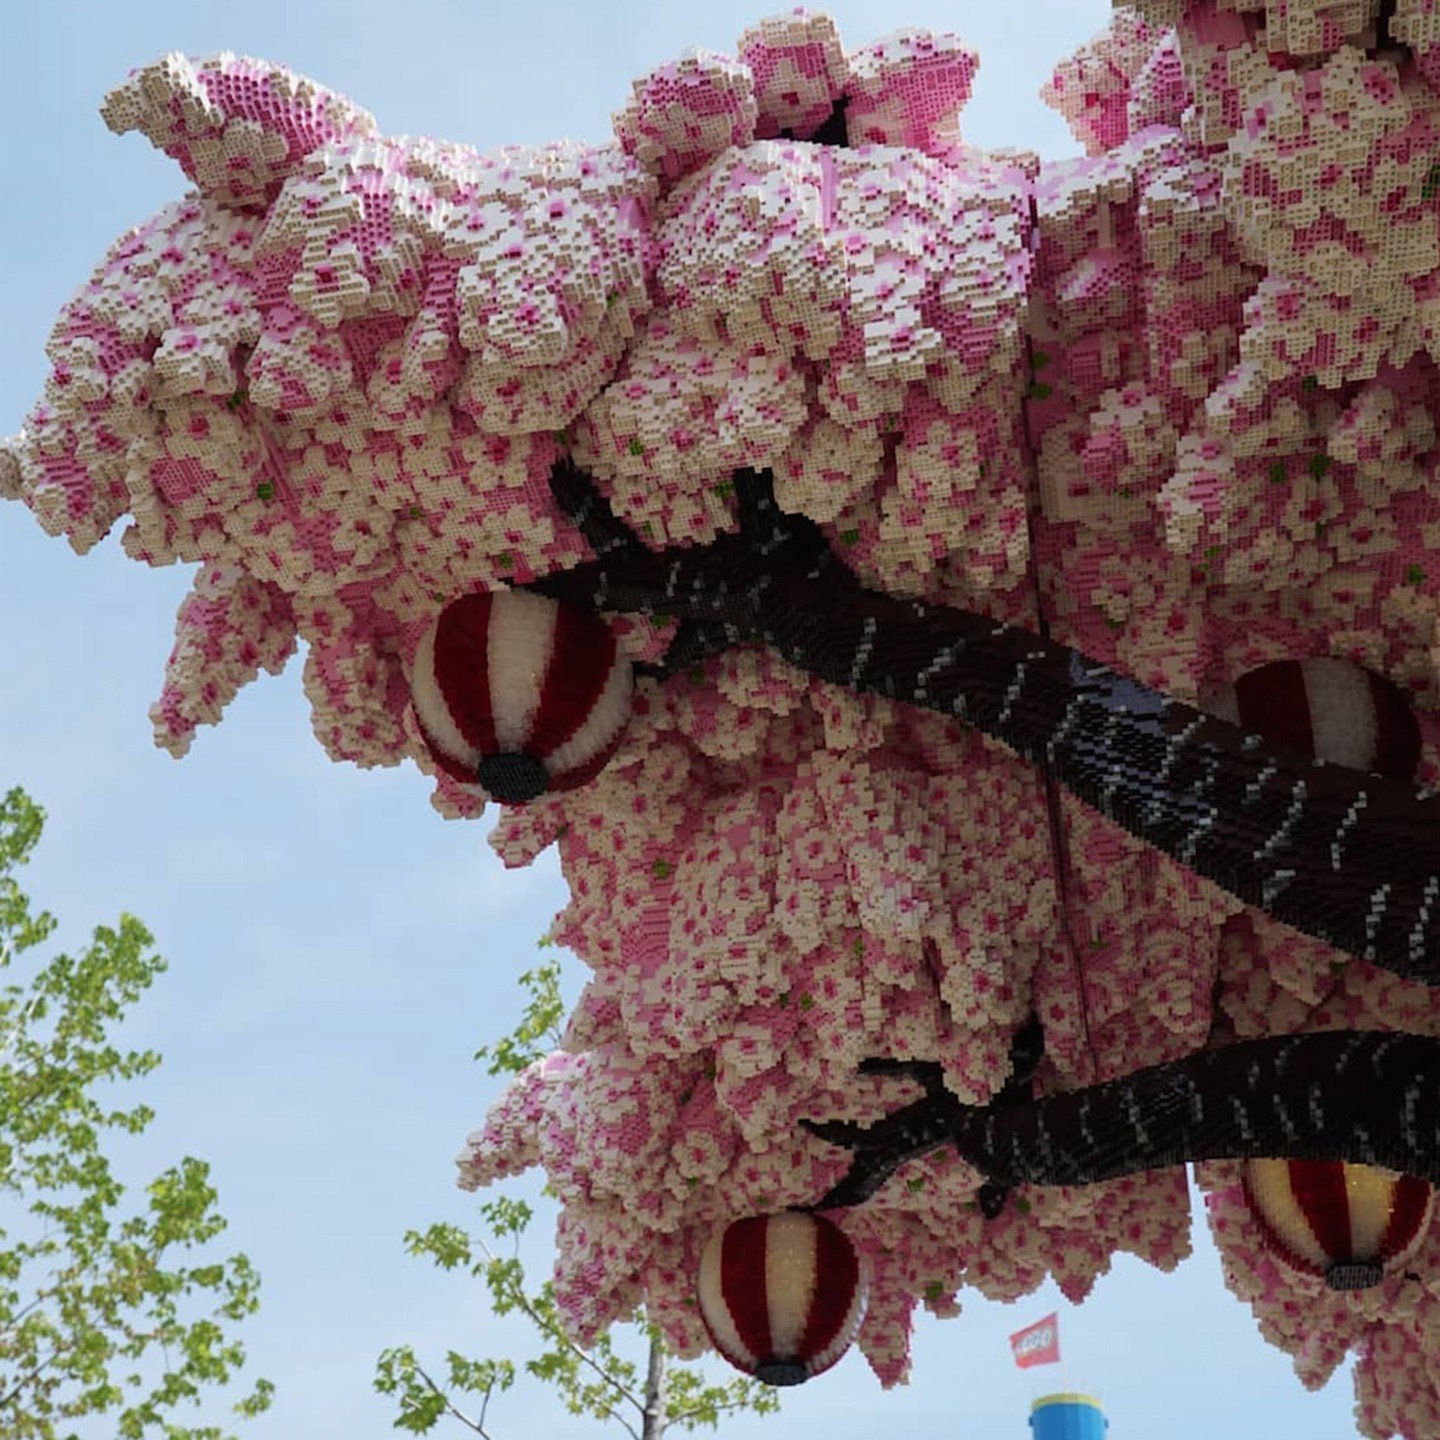 Lego Cherry Blossom Tree at Legoland Japan | POPSUGAR News